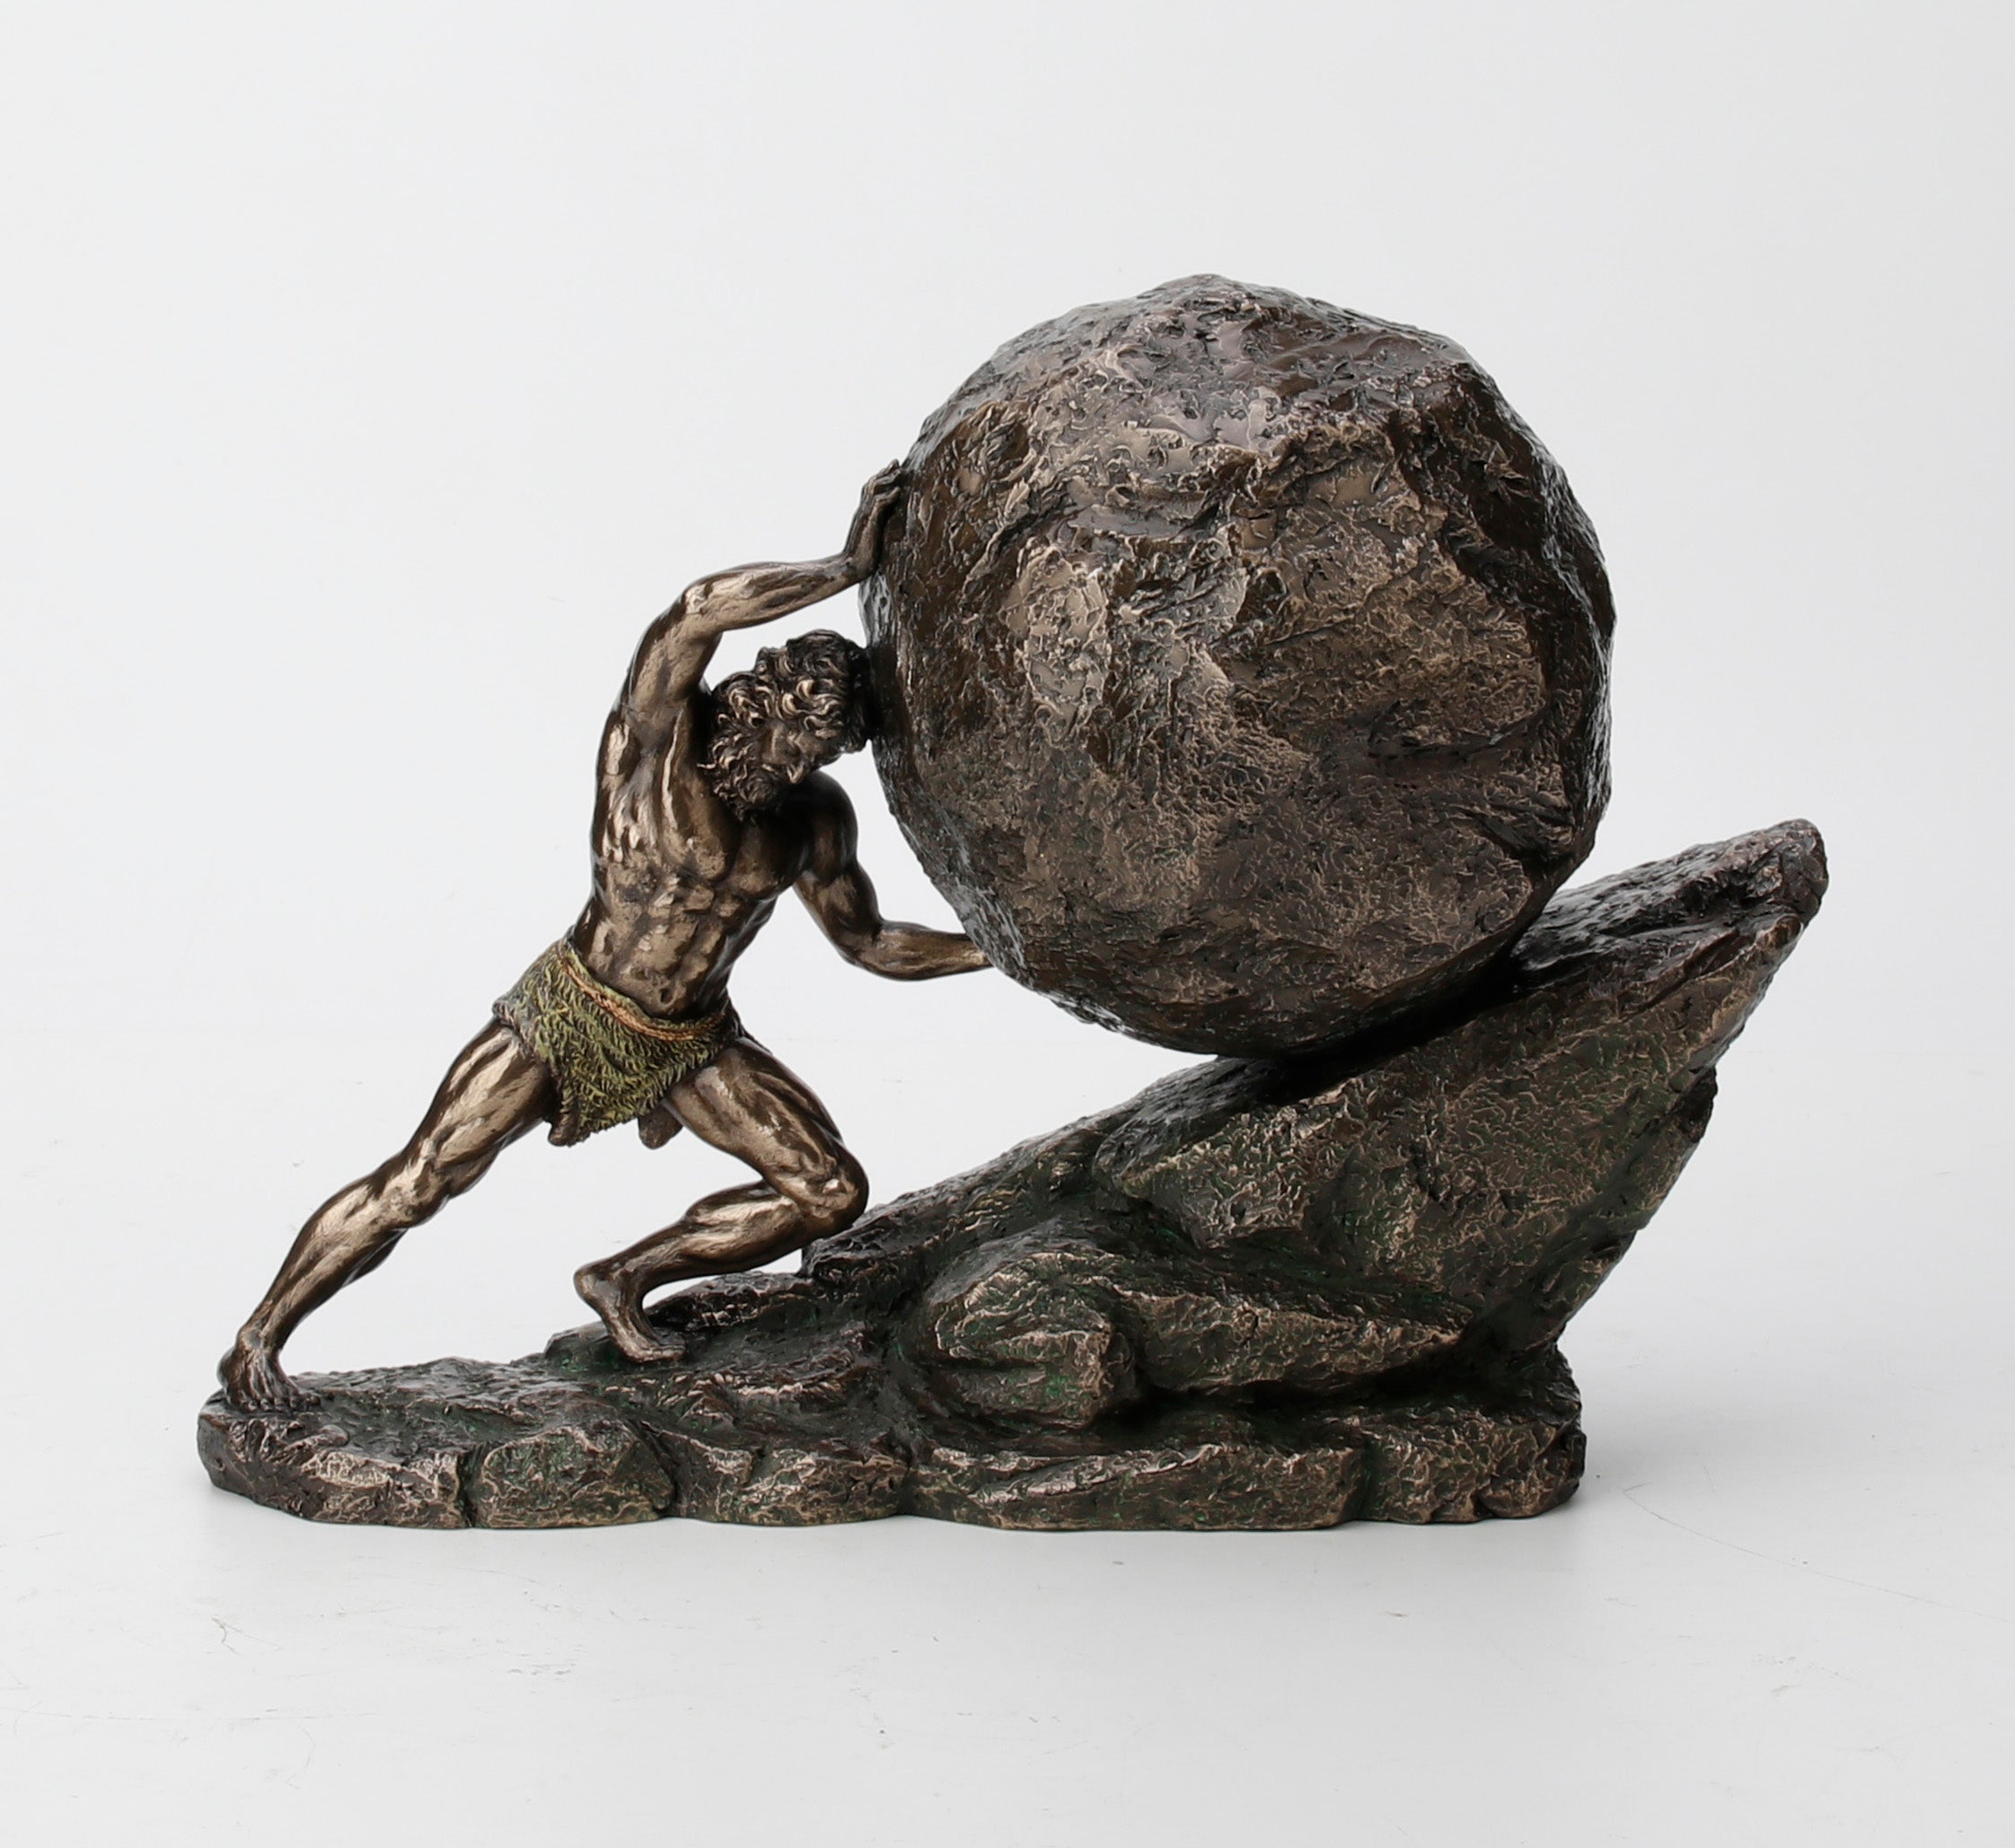 Sisyphus and the Eternal Boulder